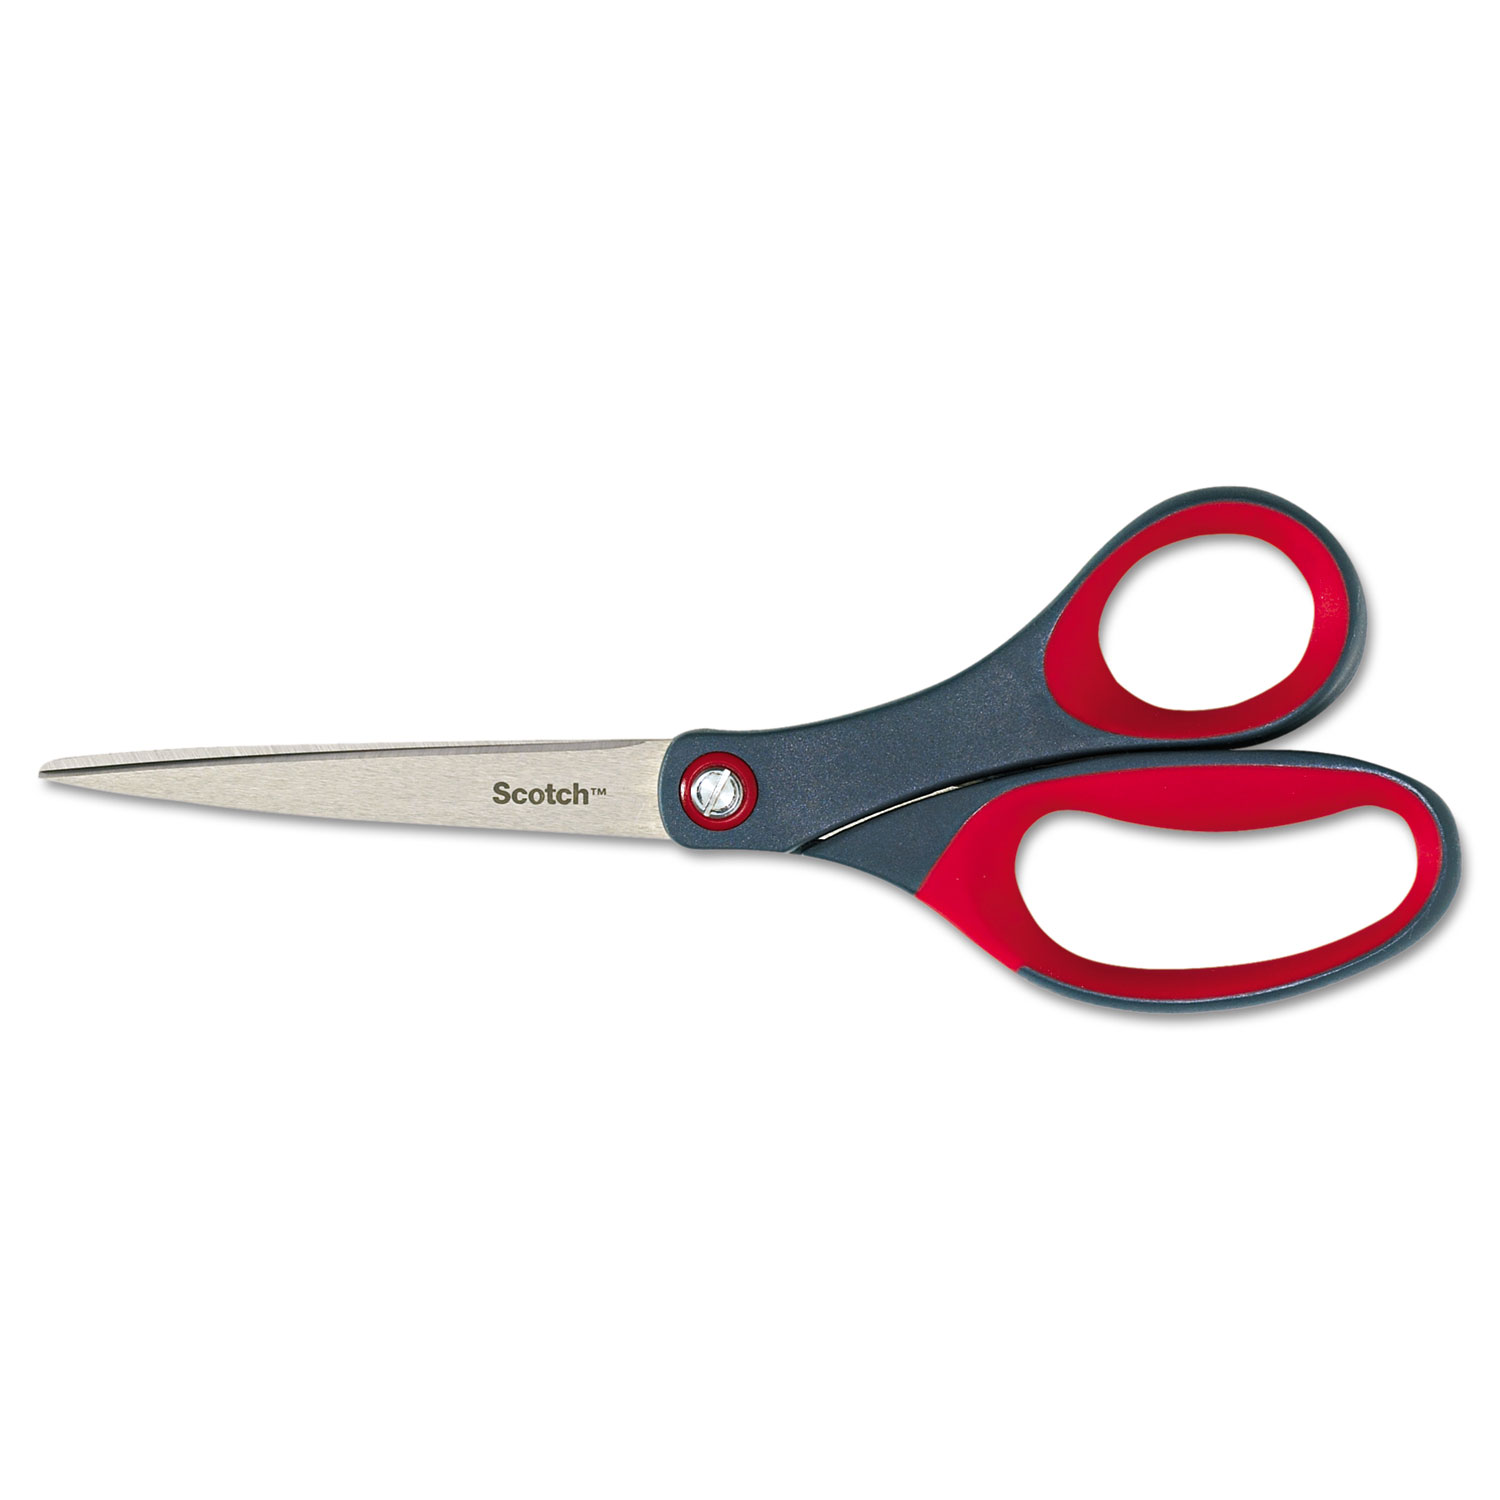 Precision Scissors, 8 Long, 3.13 Cut Length, Gray/Red Straight Handle